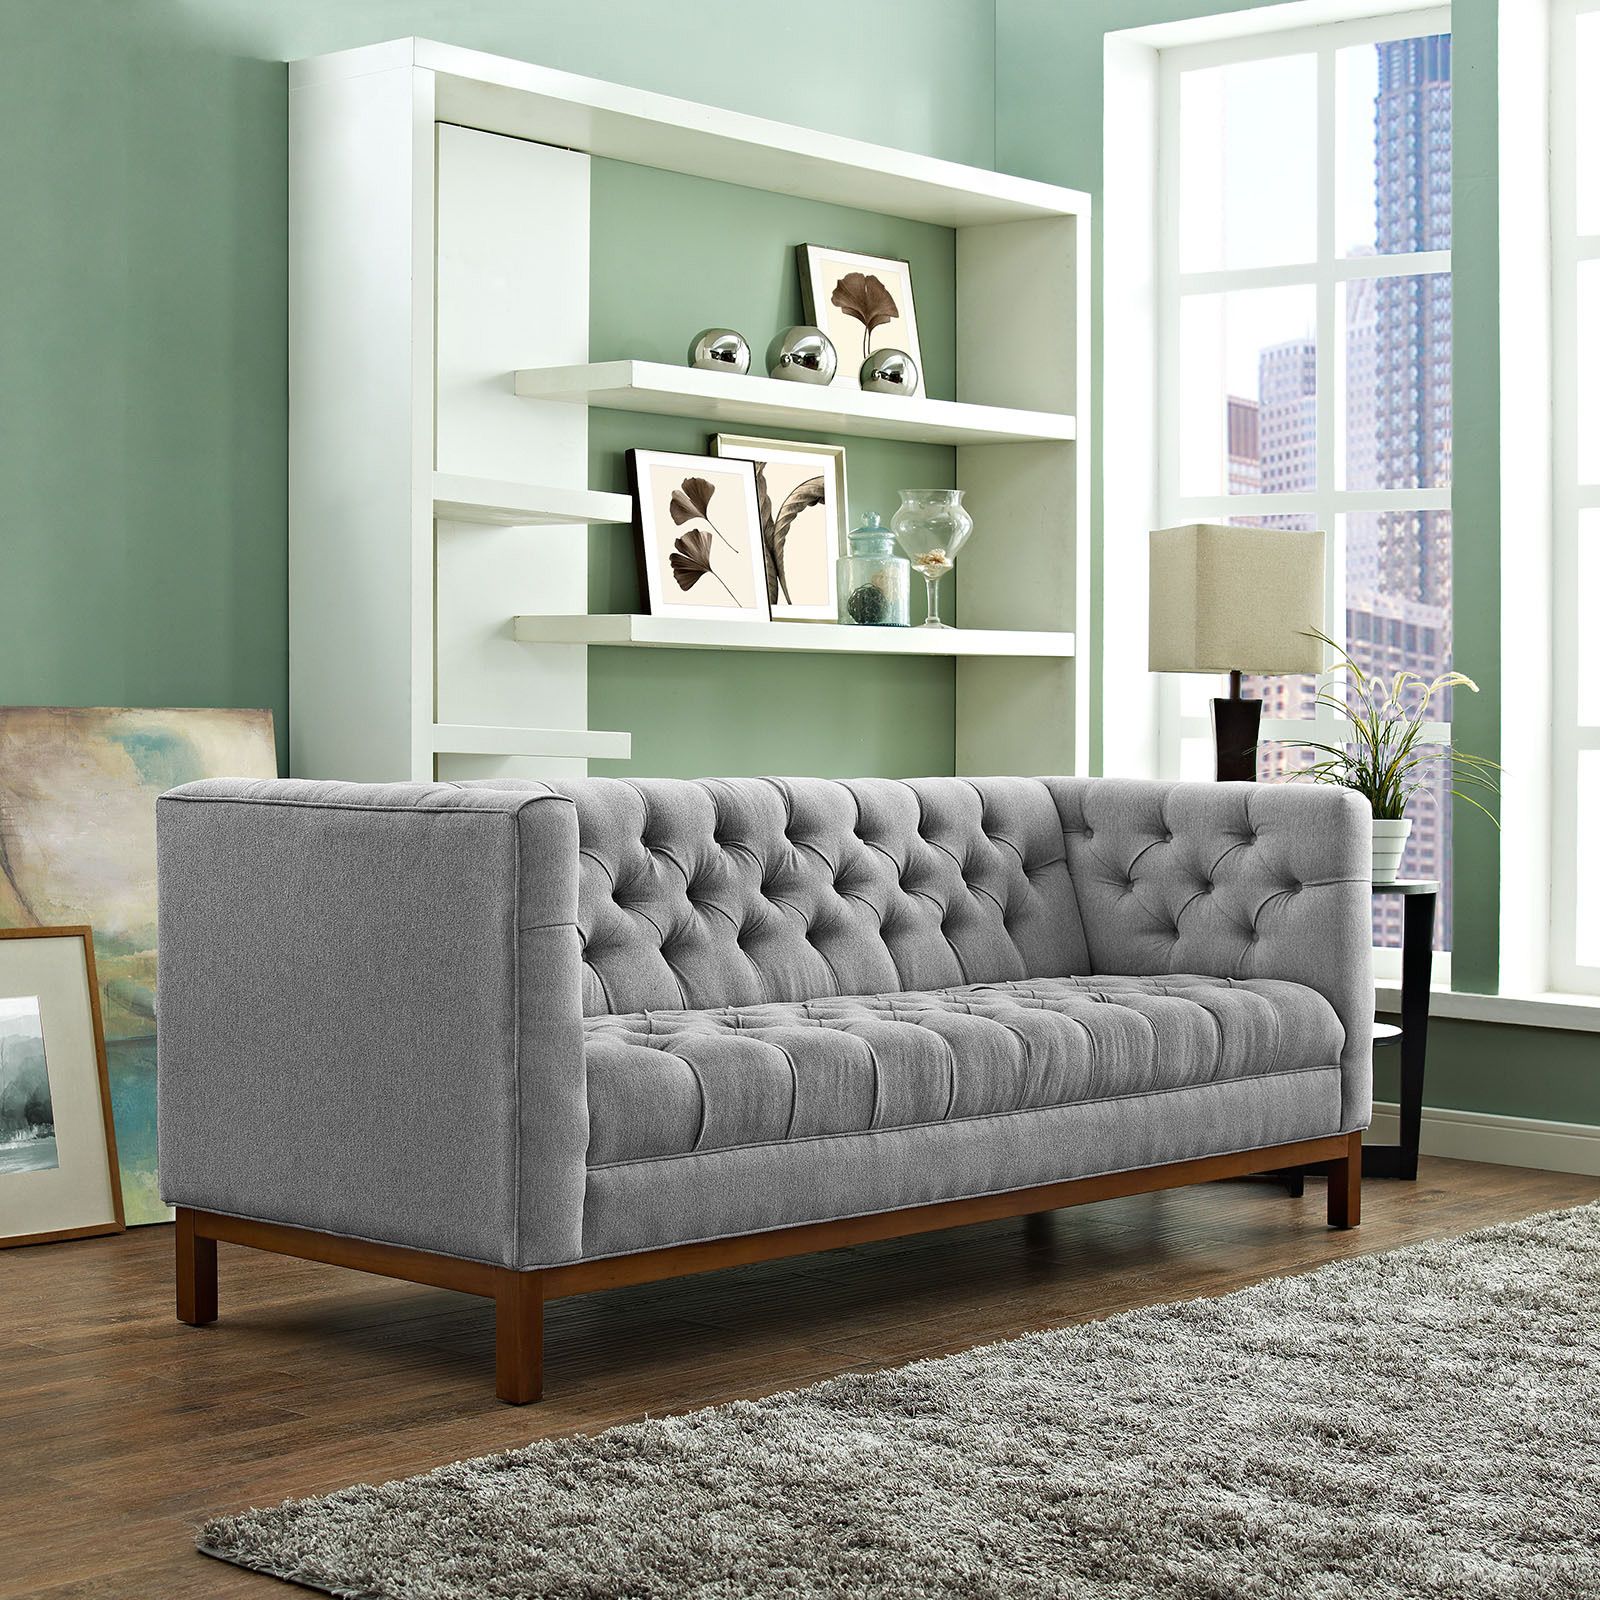 Custom Made Sofa Upholstery Dubai